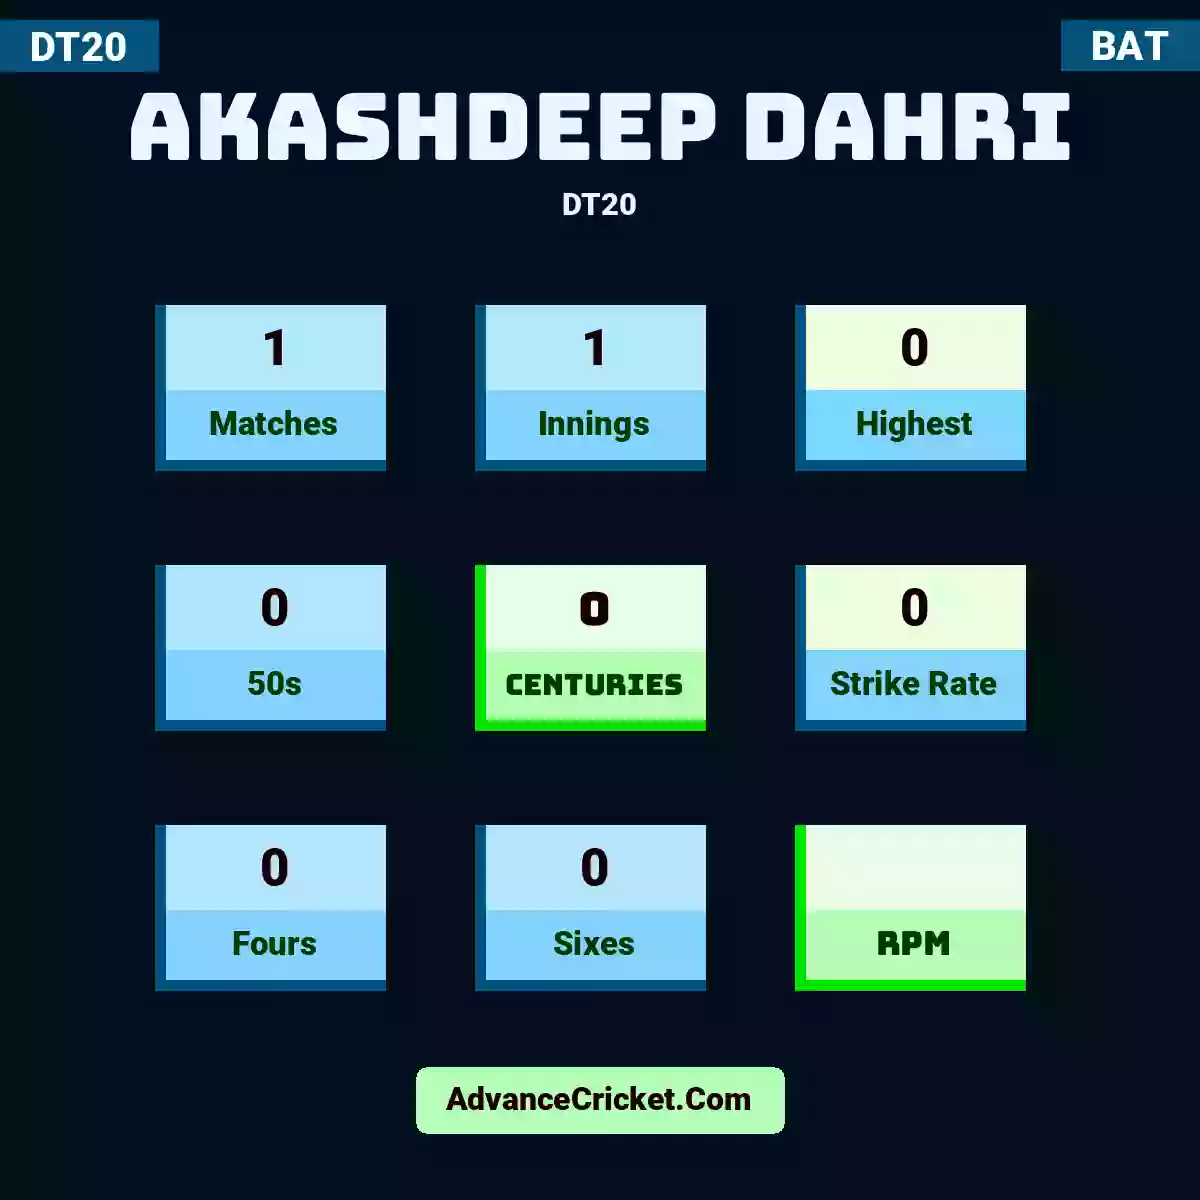 Akashdeep Dahri DT20 , Akashdeep Dahri played 1 matches, scored 0 runs as highest, 0 half-centuries, and 0 centuries, with a strike rate of 0. A.Dahri hit 0 fours and 0 sixes.